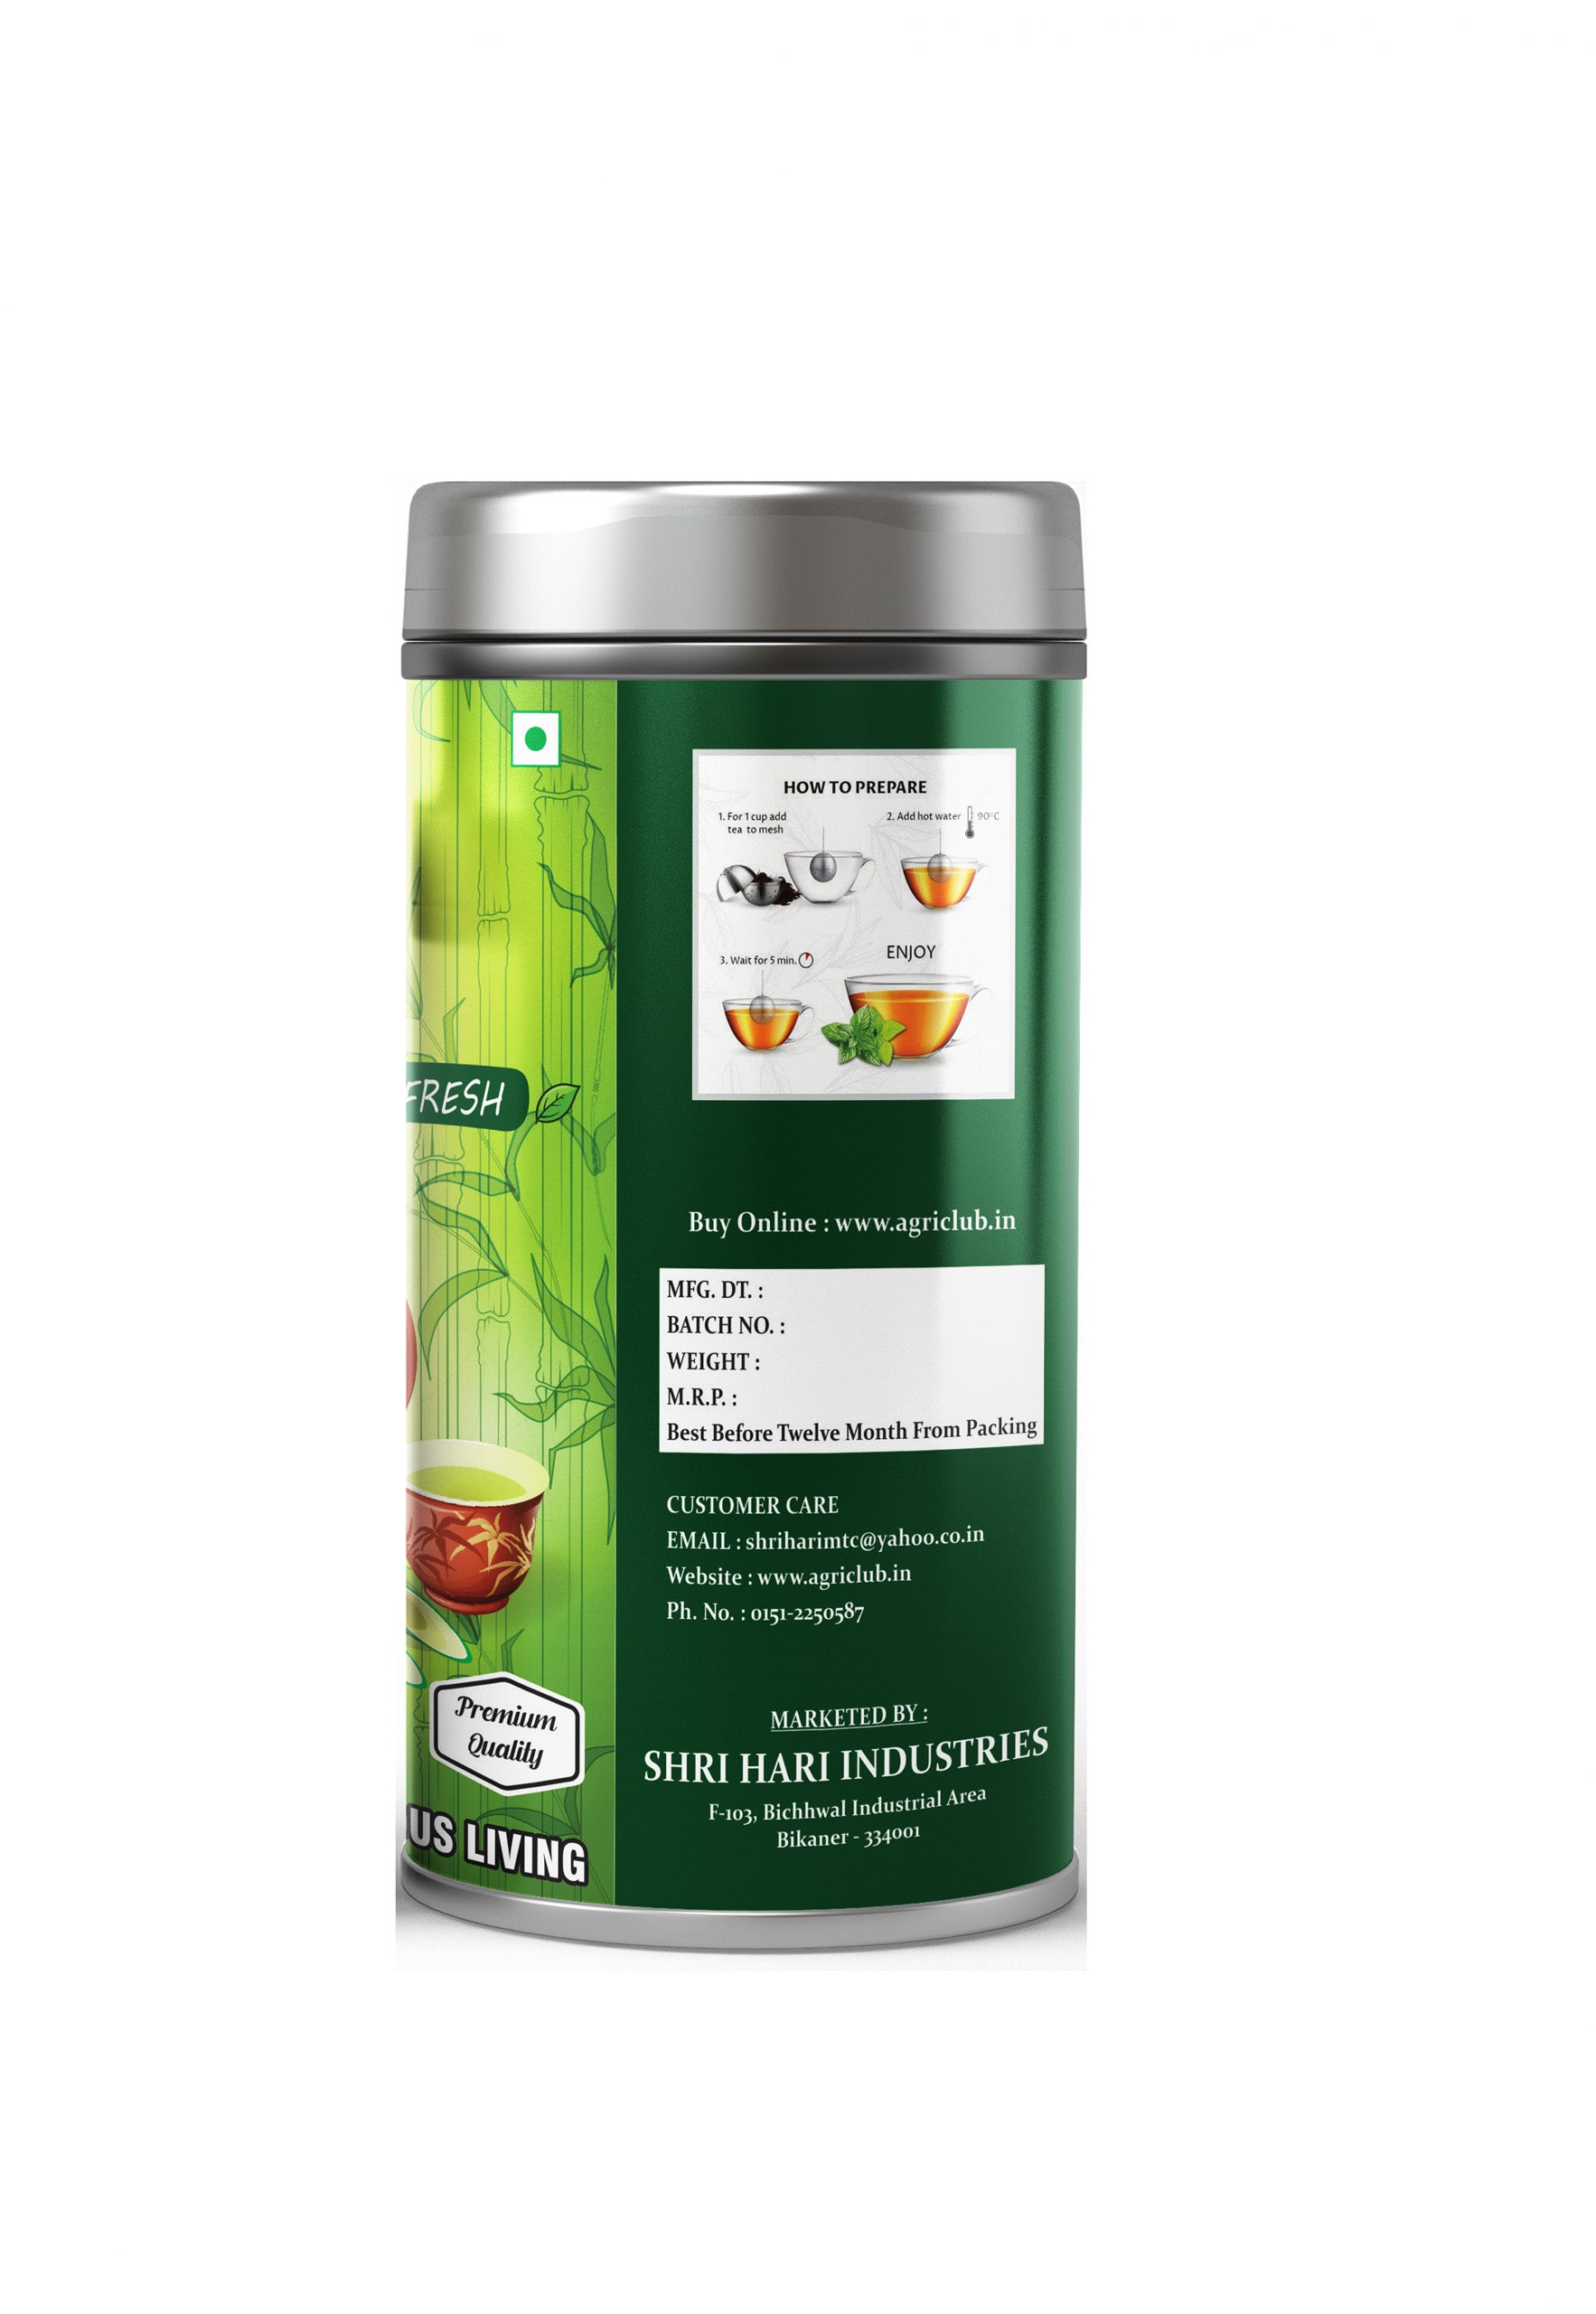 Tulsi Herbal Infusion Tea Premium Quality 50 GM